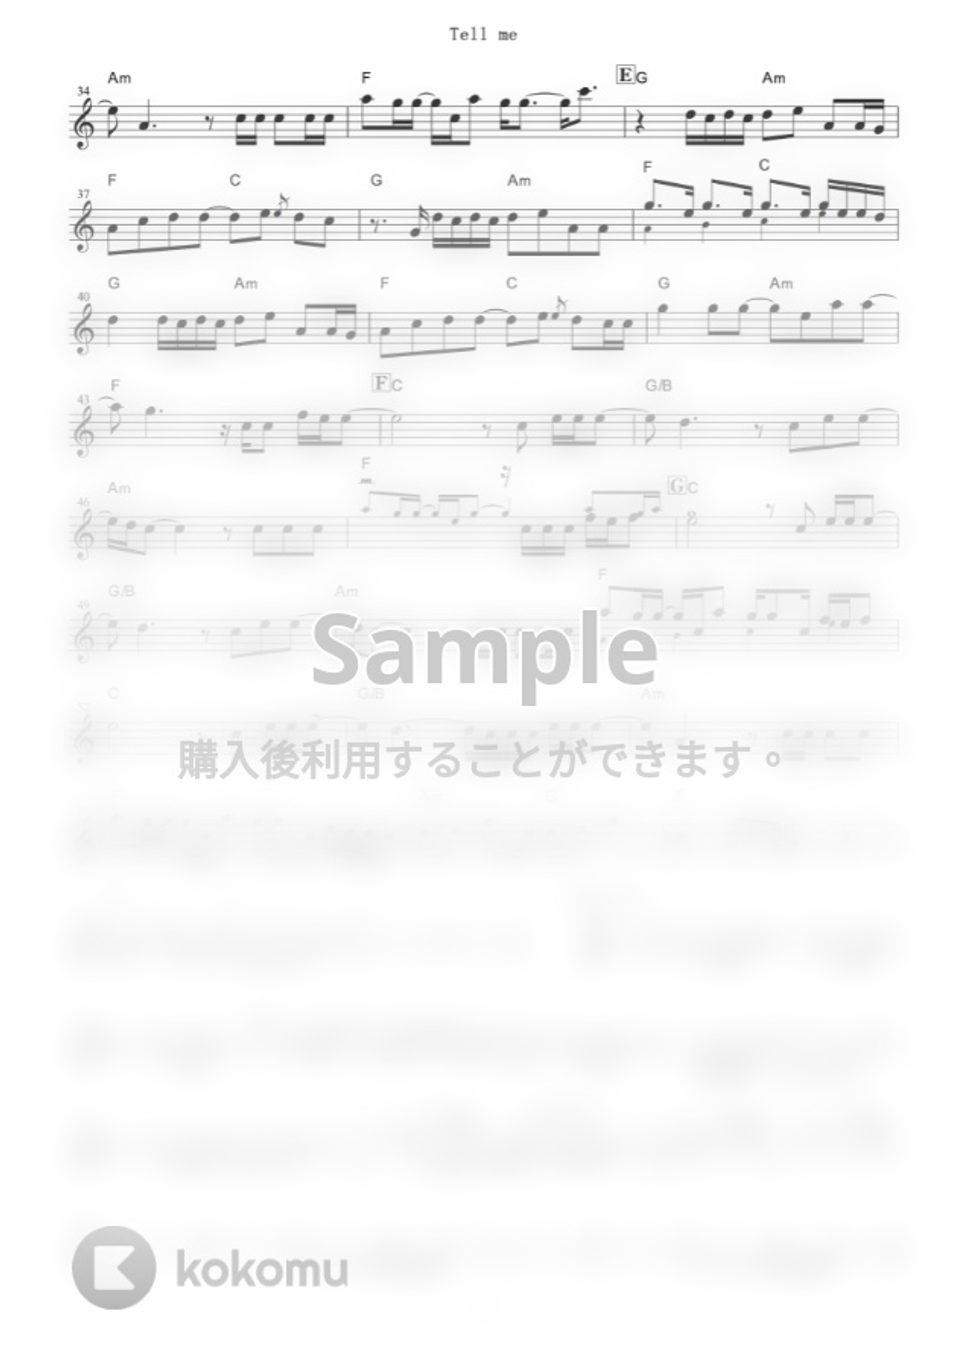 milet - Tell me (『Fate/Grand Order -絶対魔獣戦線バビロニア-』 / in C) by muta-sax